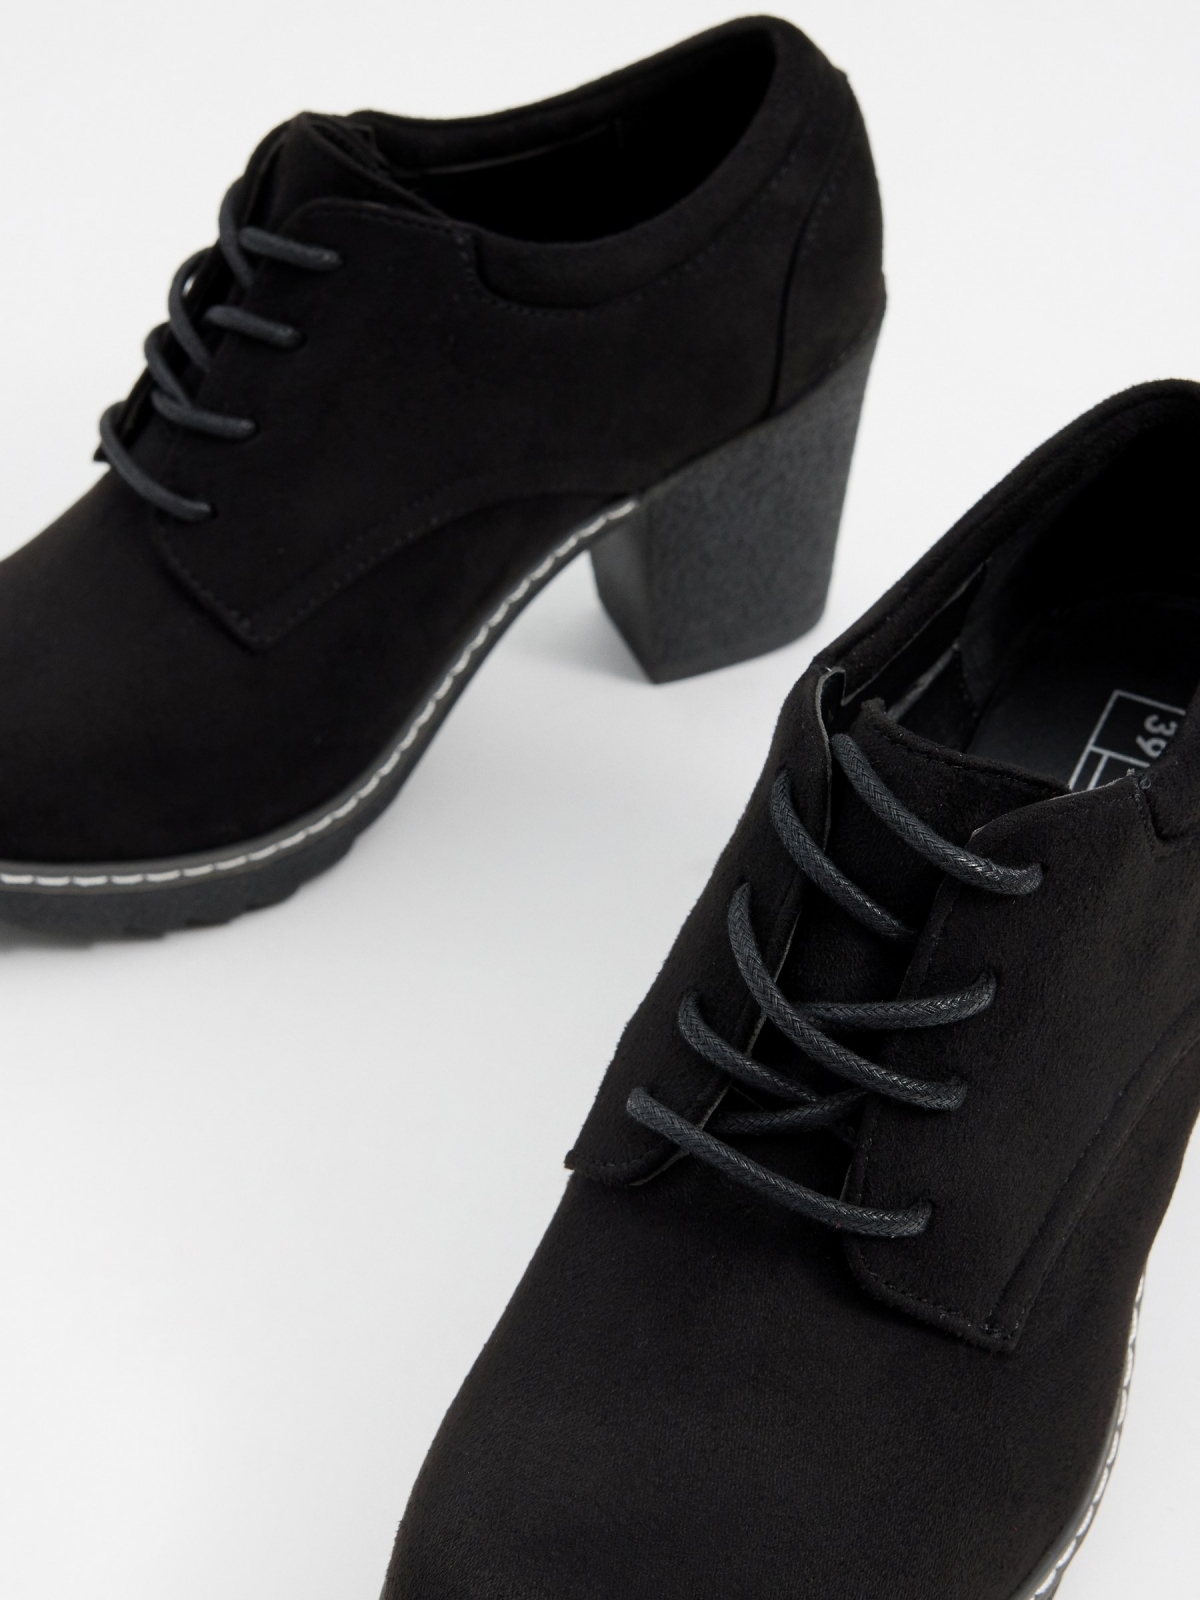 Black lace-up high-heeled shoe black